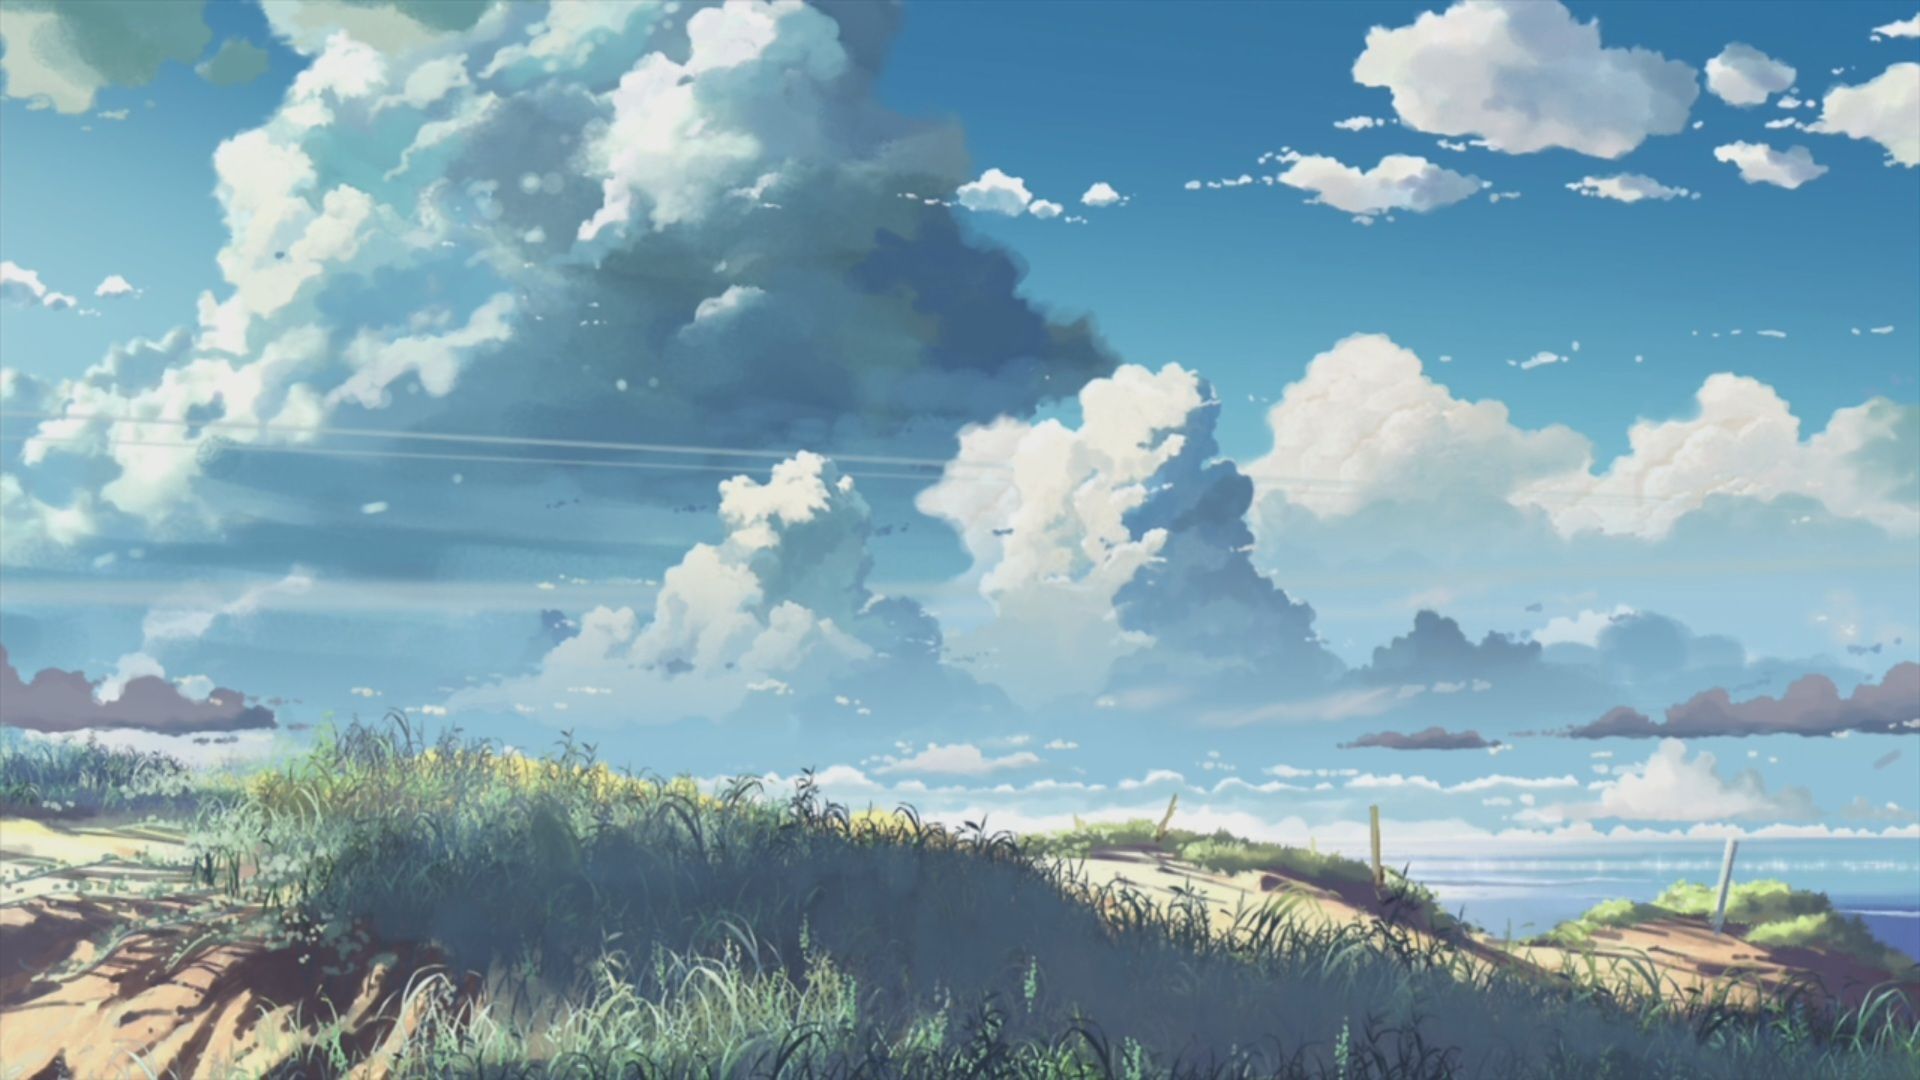 Beautiful Anime Scenery Wallpapers